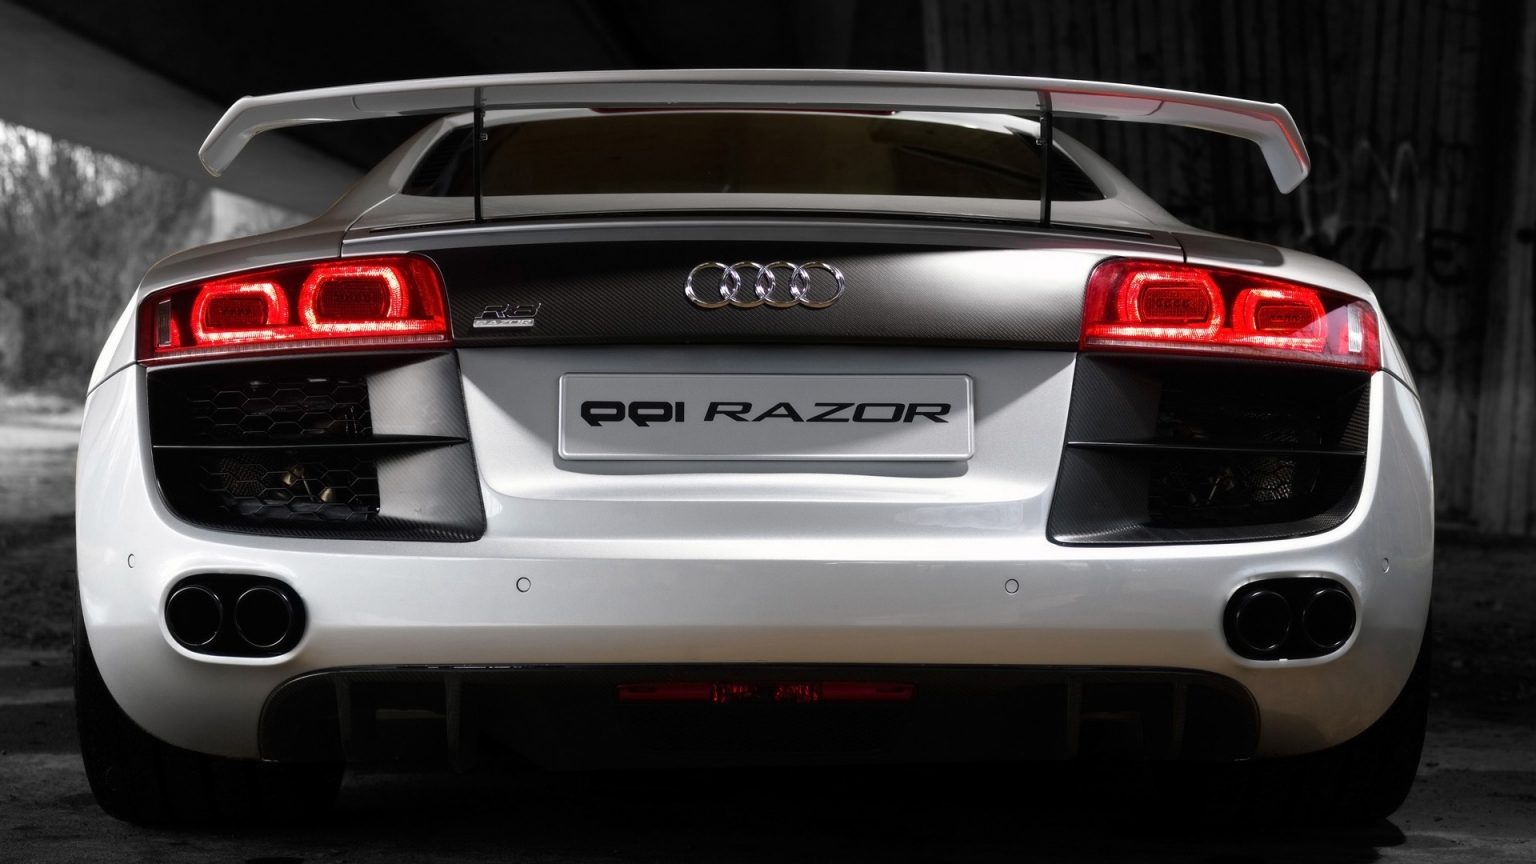 2008 PPI Audi R8 Razor Rear for 1536 x 864 HDTV resolution